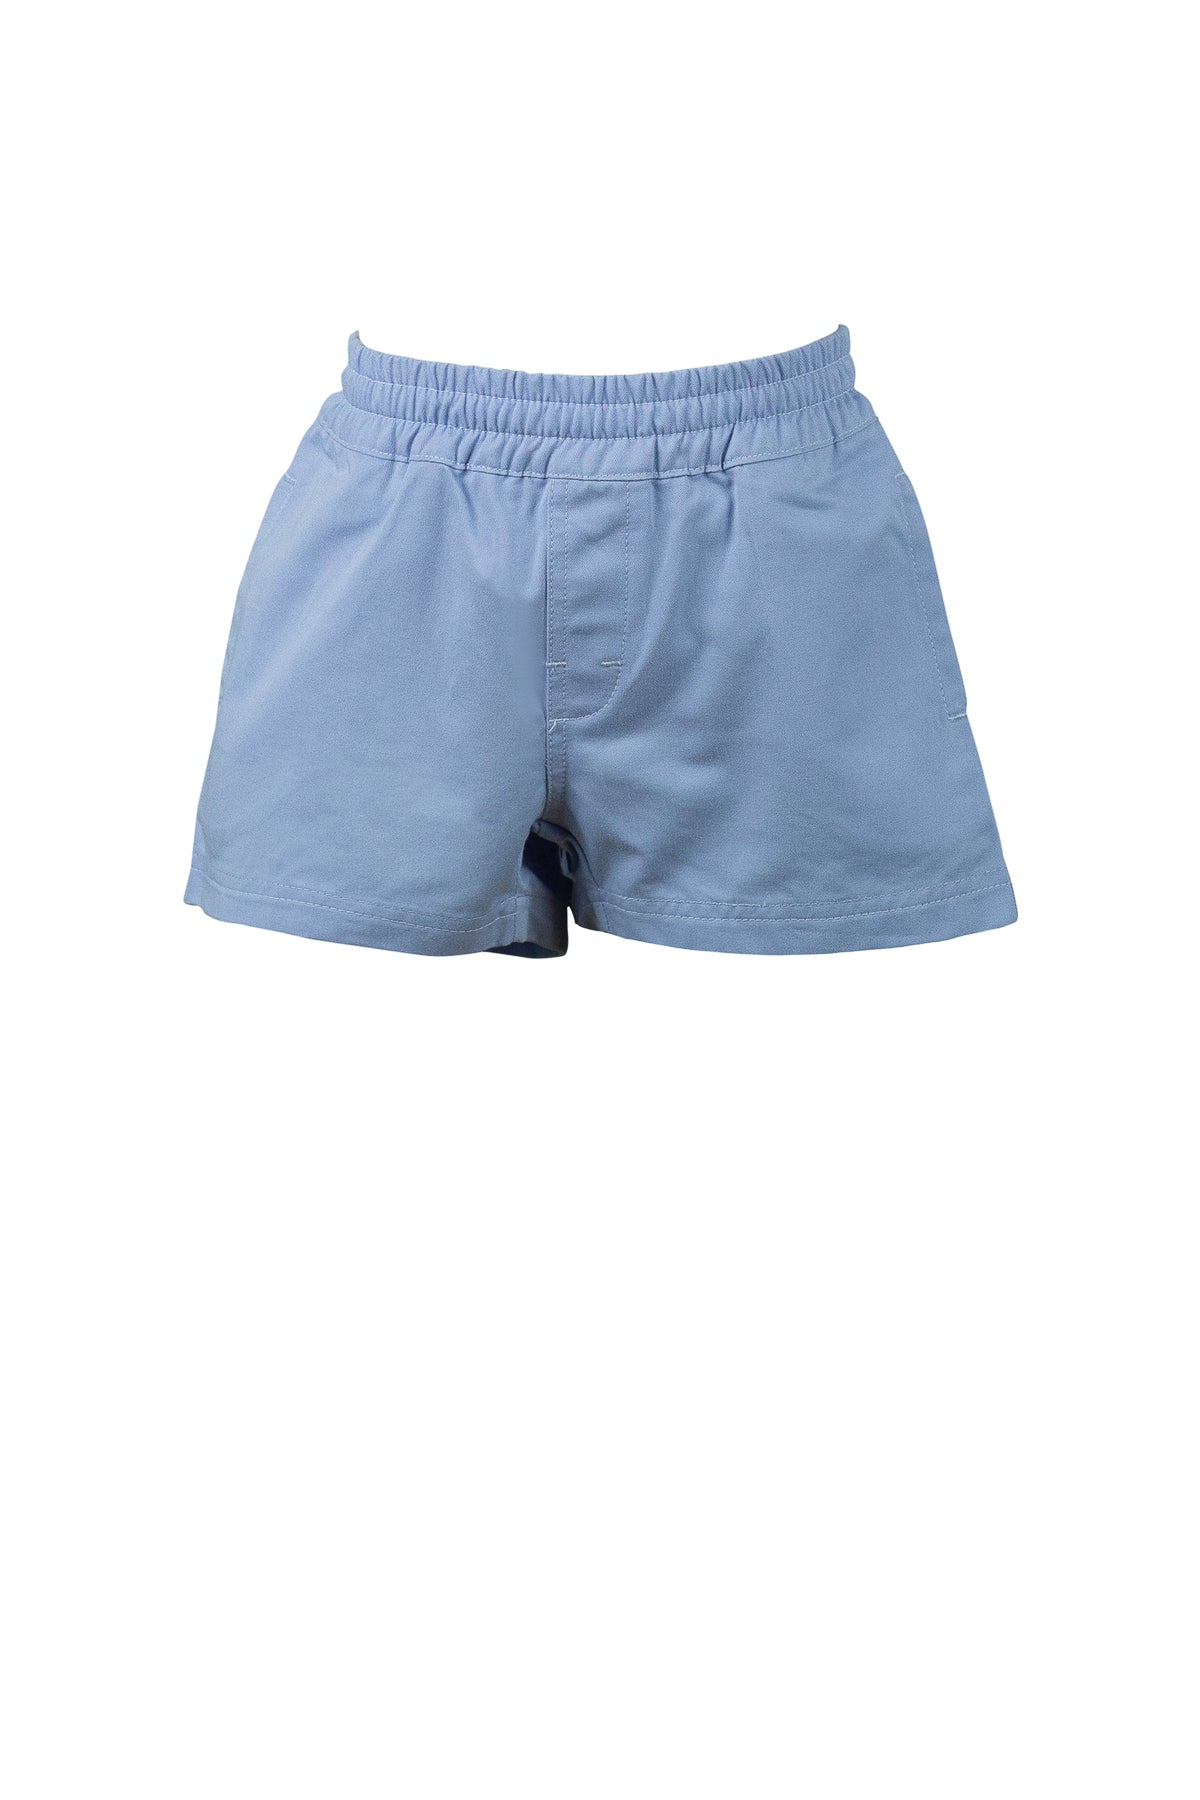 The Proper Peony Spencer Shorts- Powder Blue